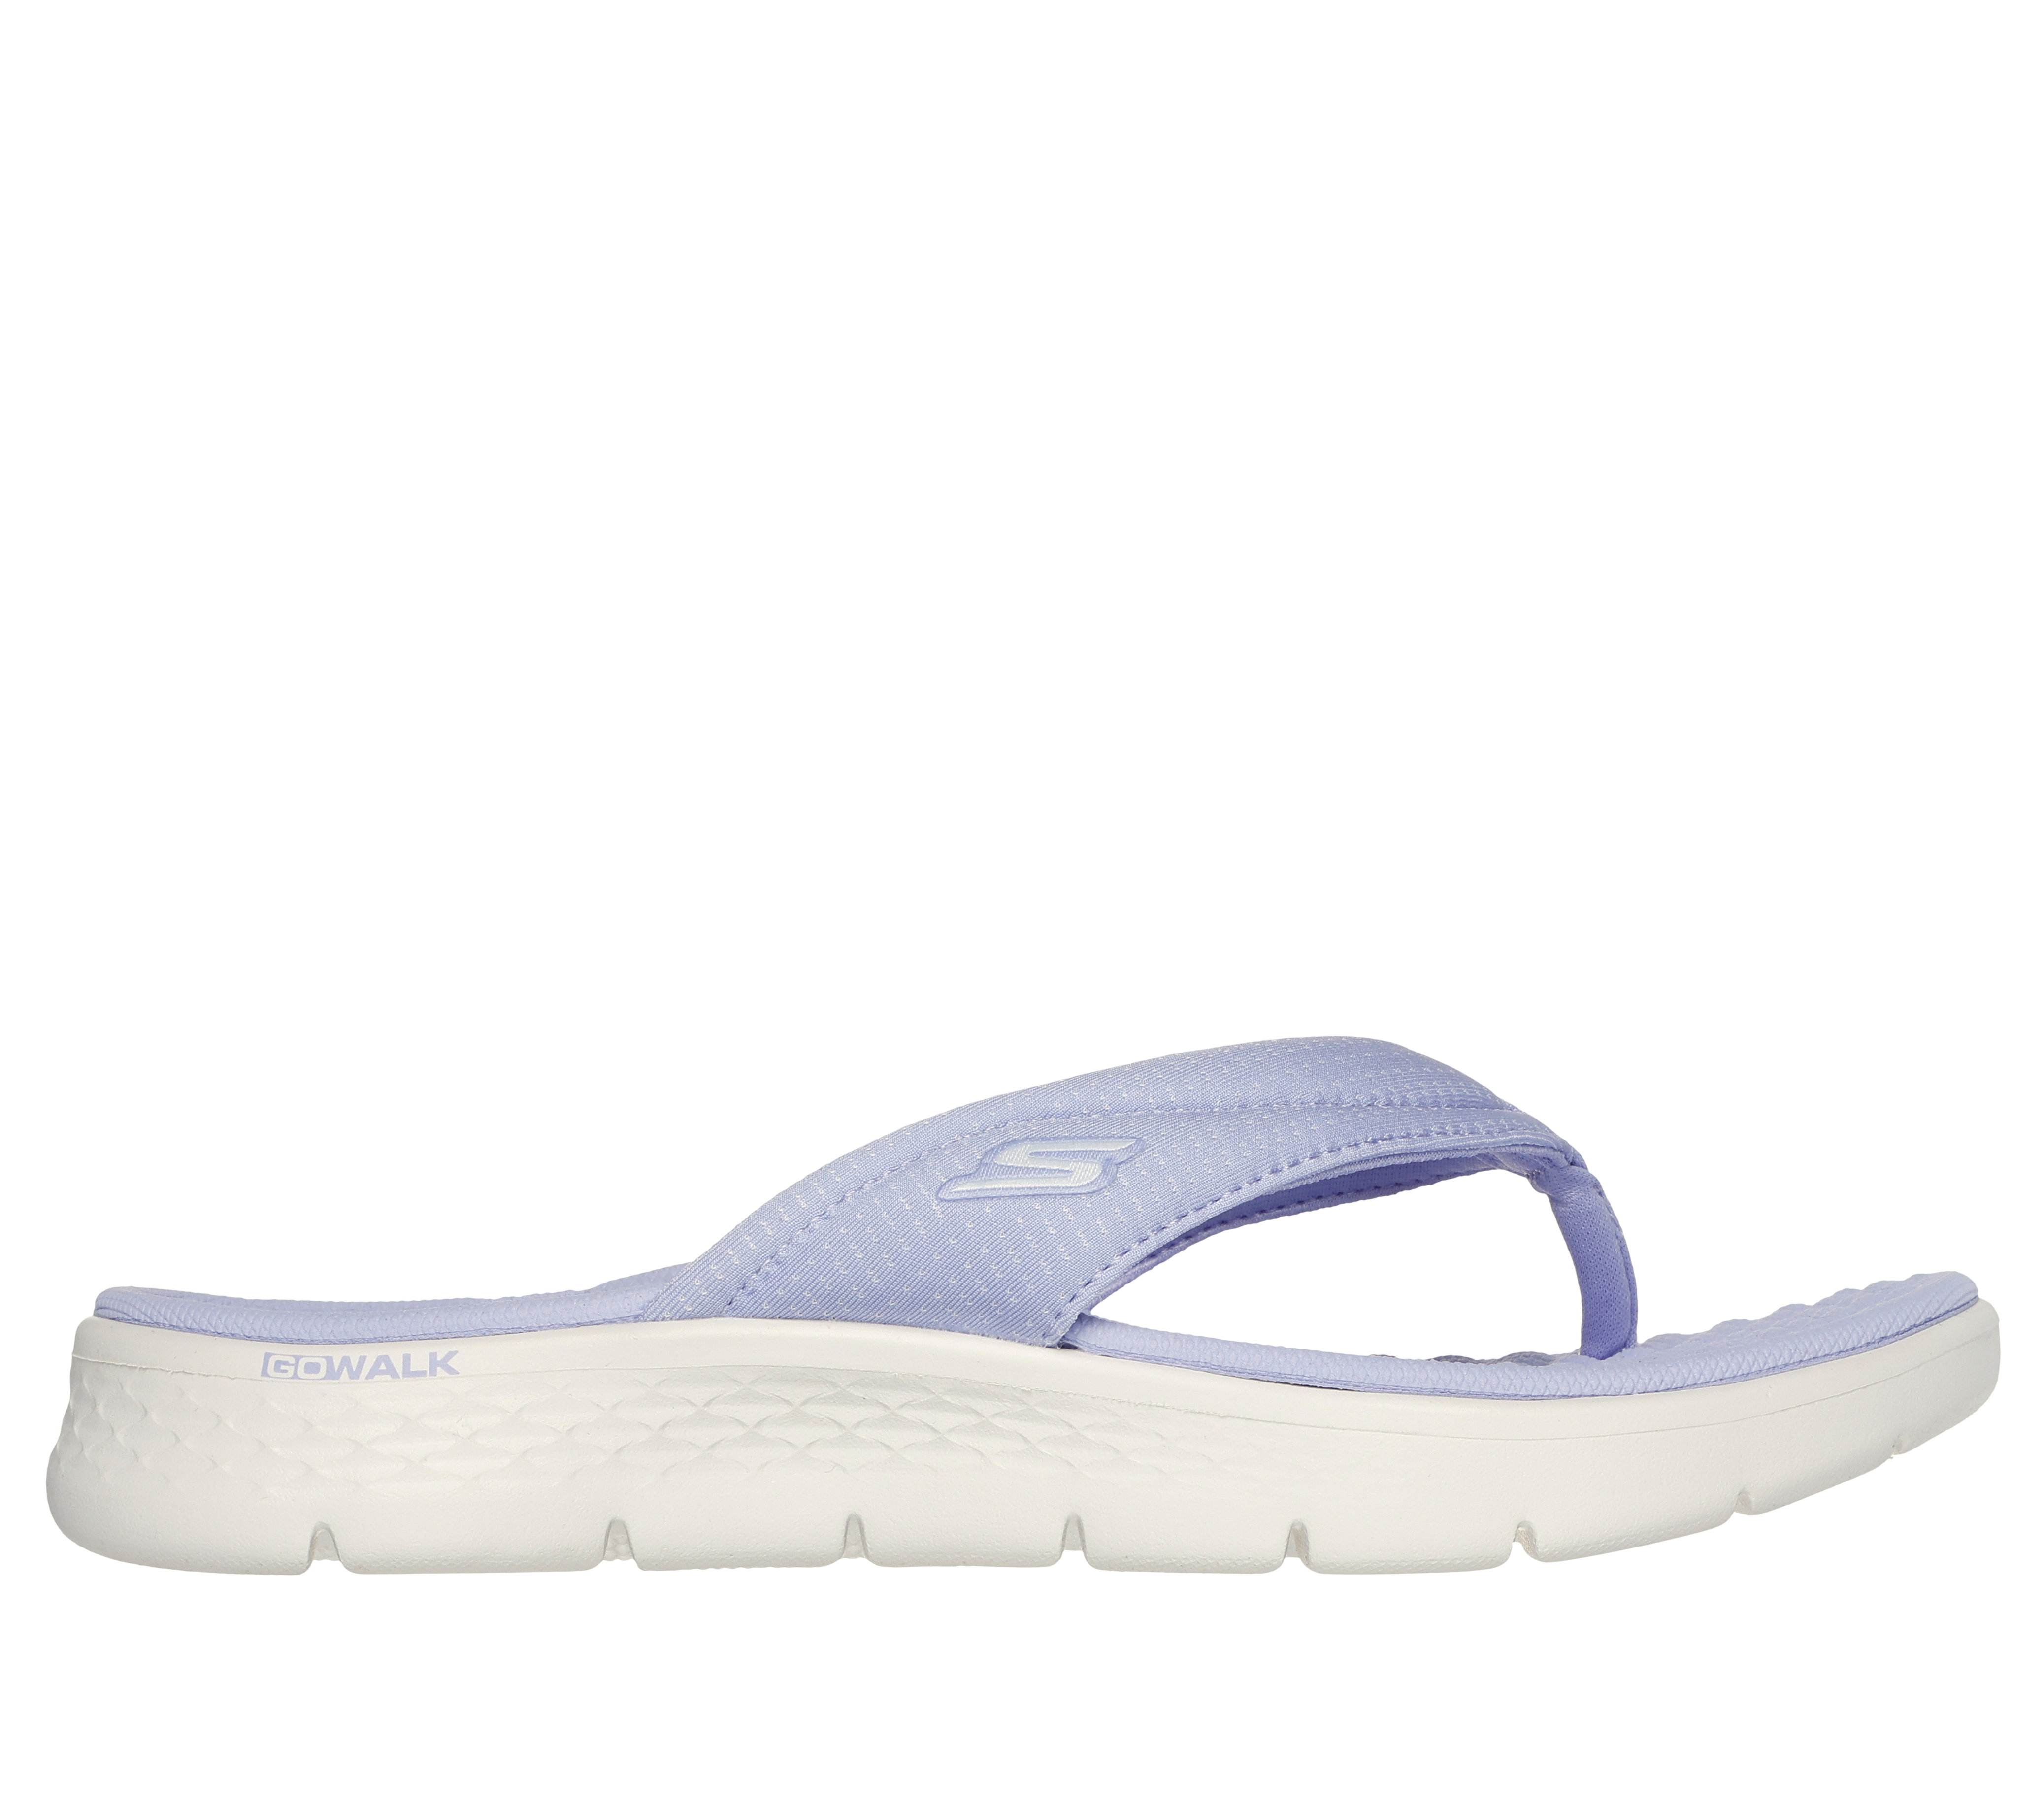 GO WALK Flex Sandal - Impress | SKECHERS